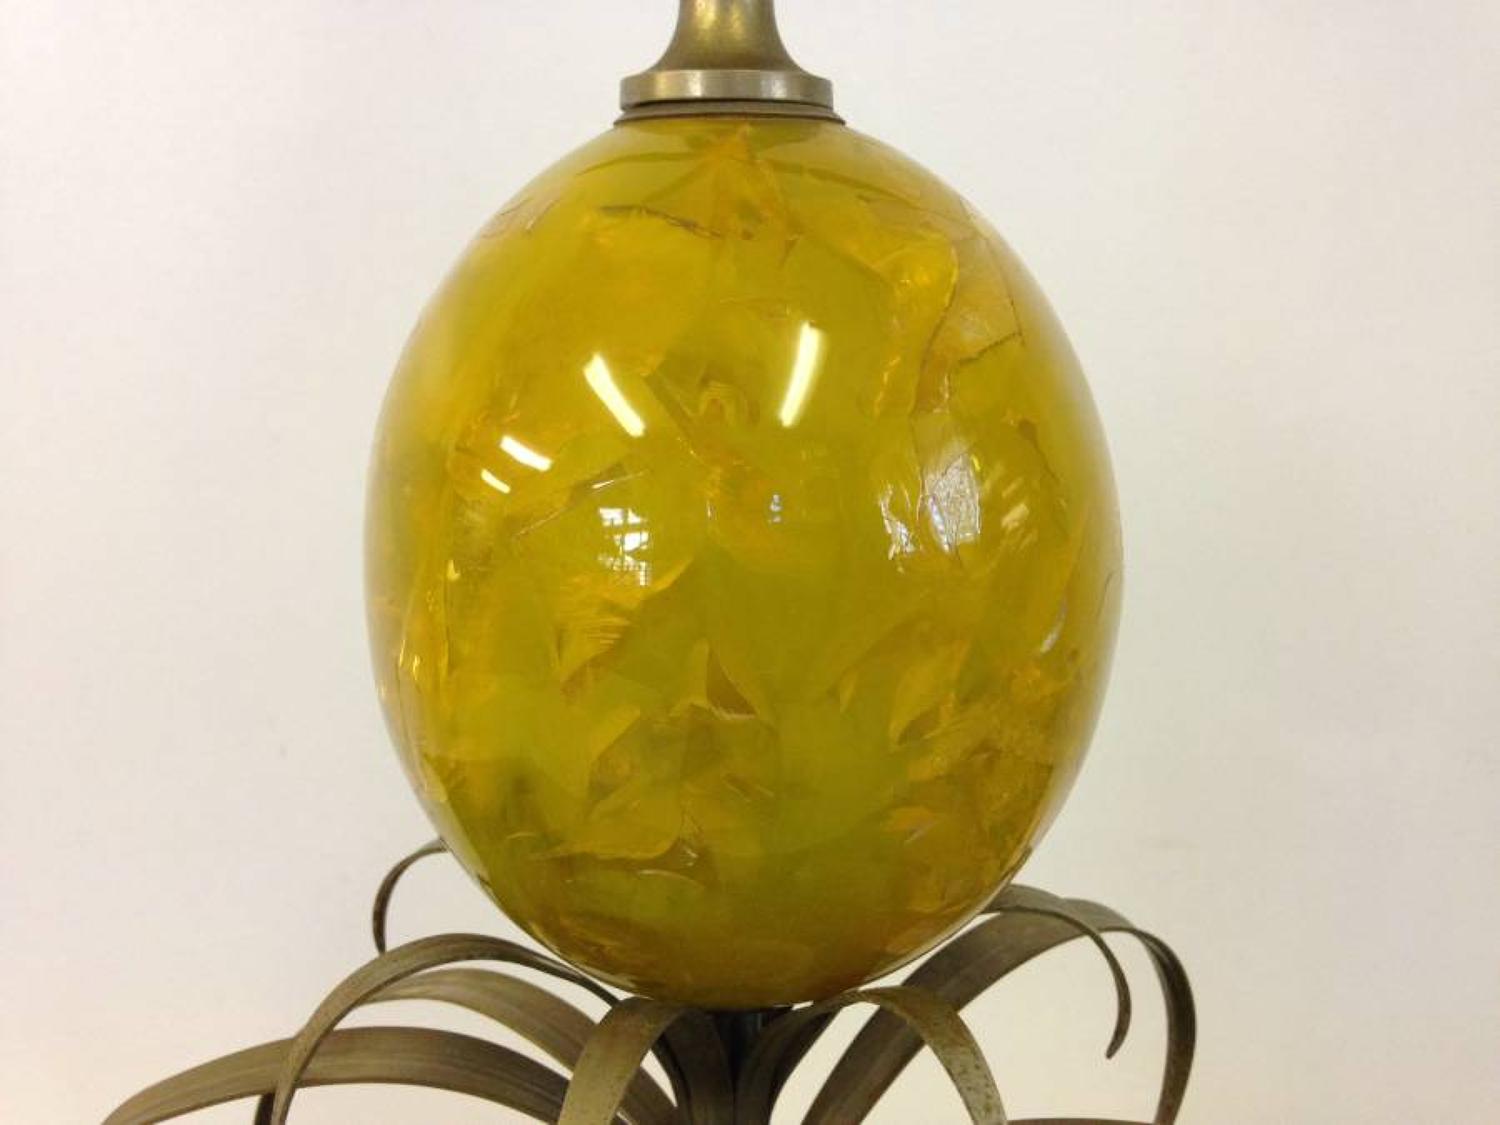 French resin pineapple lamp